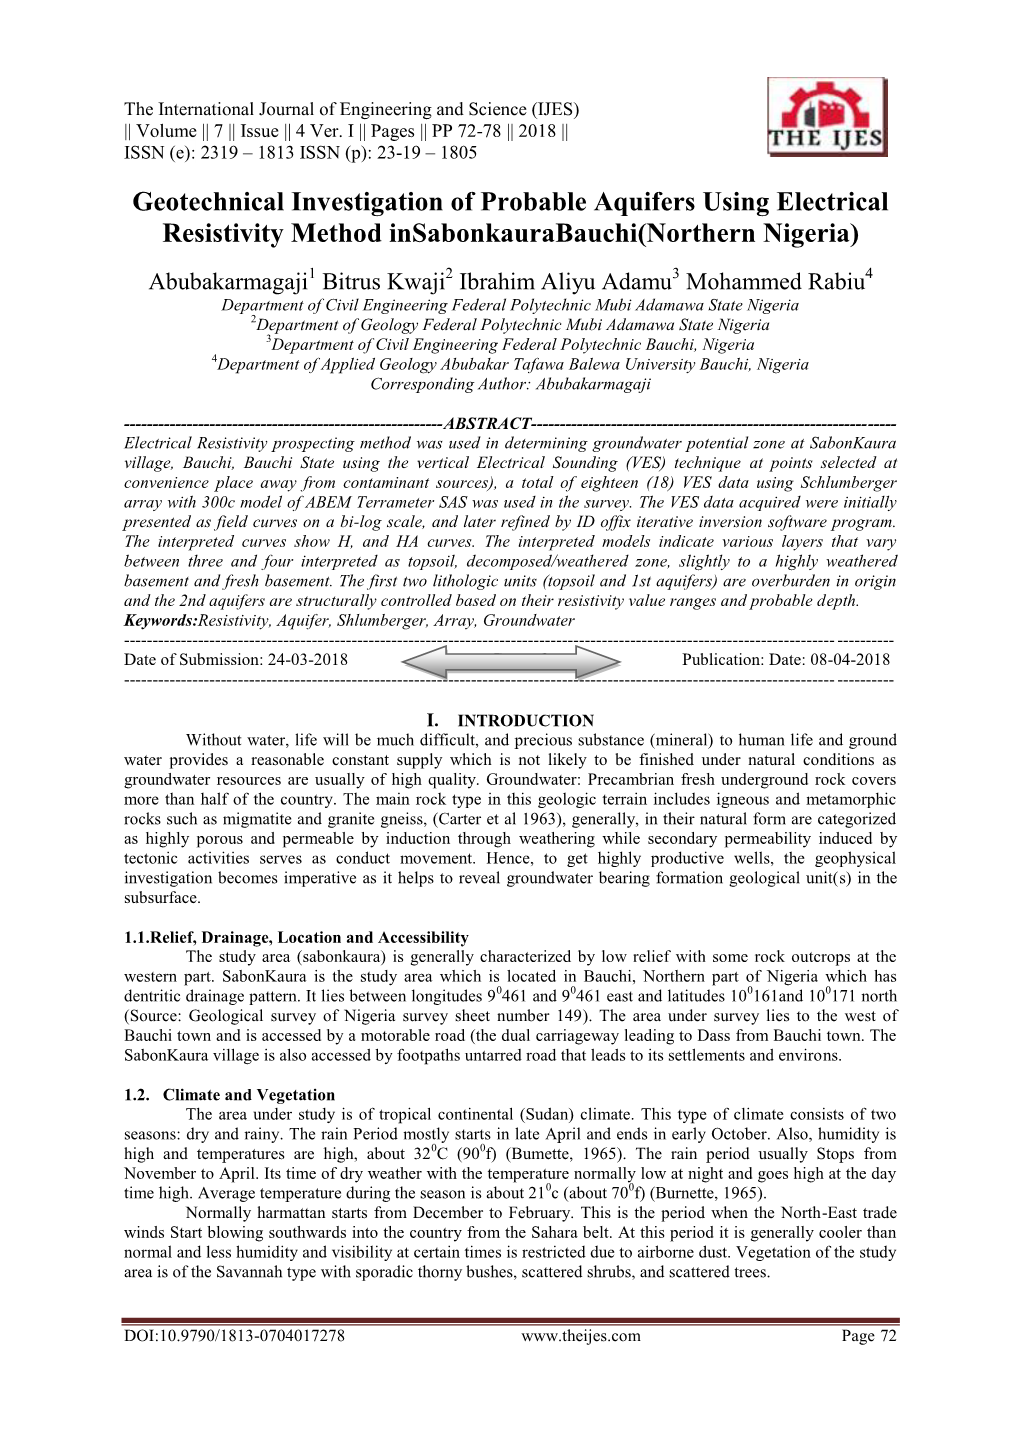 Geotechnical Investigation of Probable Aquifers Using Electrical Resistivity Method Insabonkaurabauchi(Northern Nigeria)